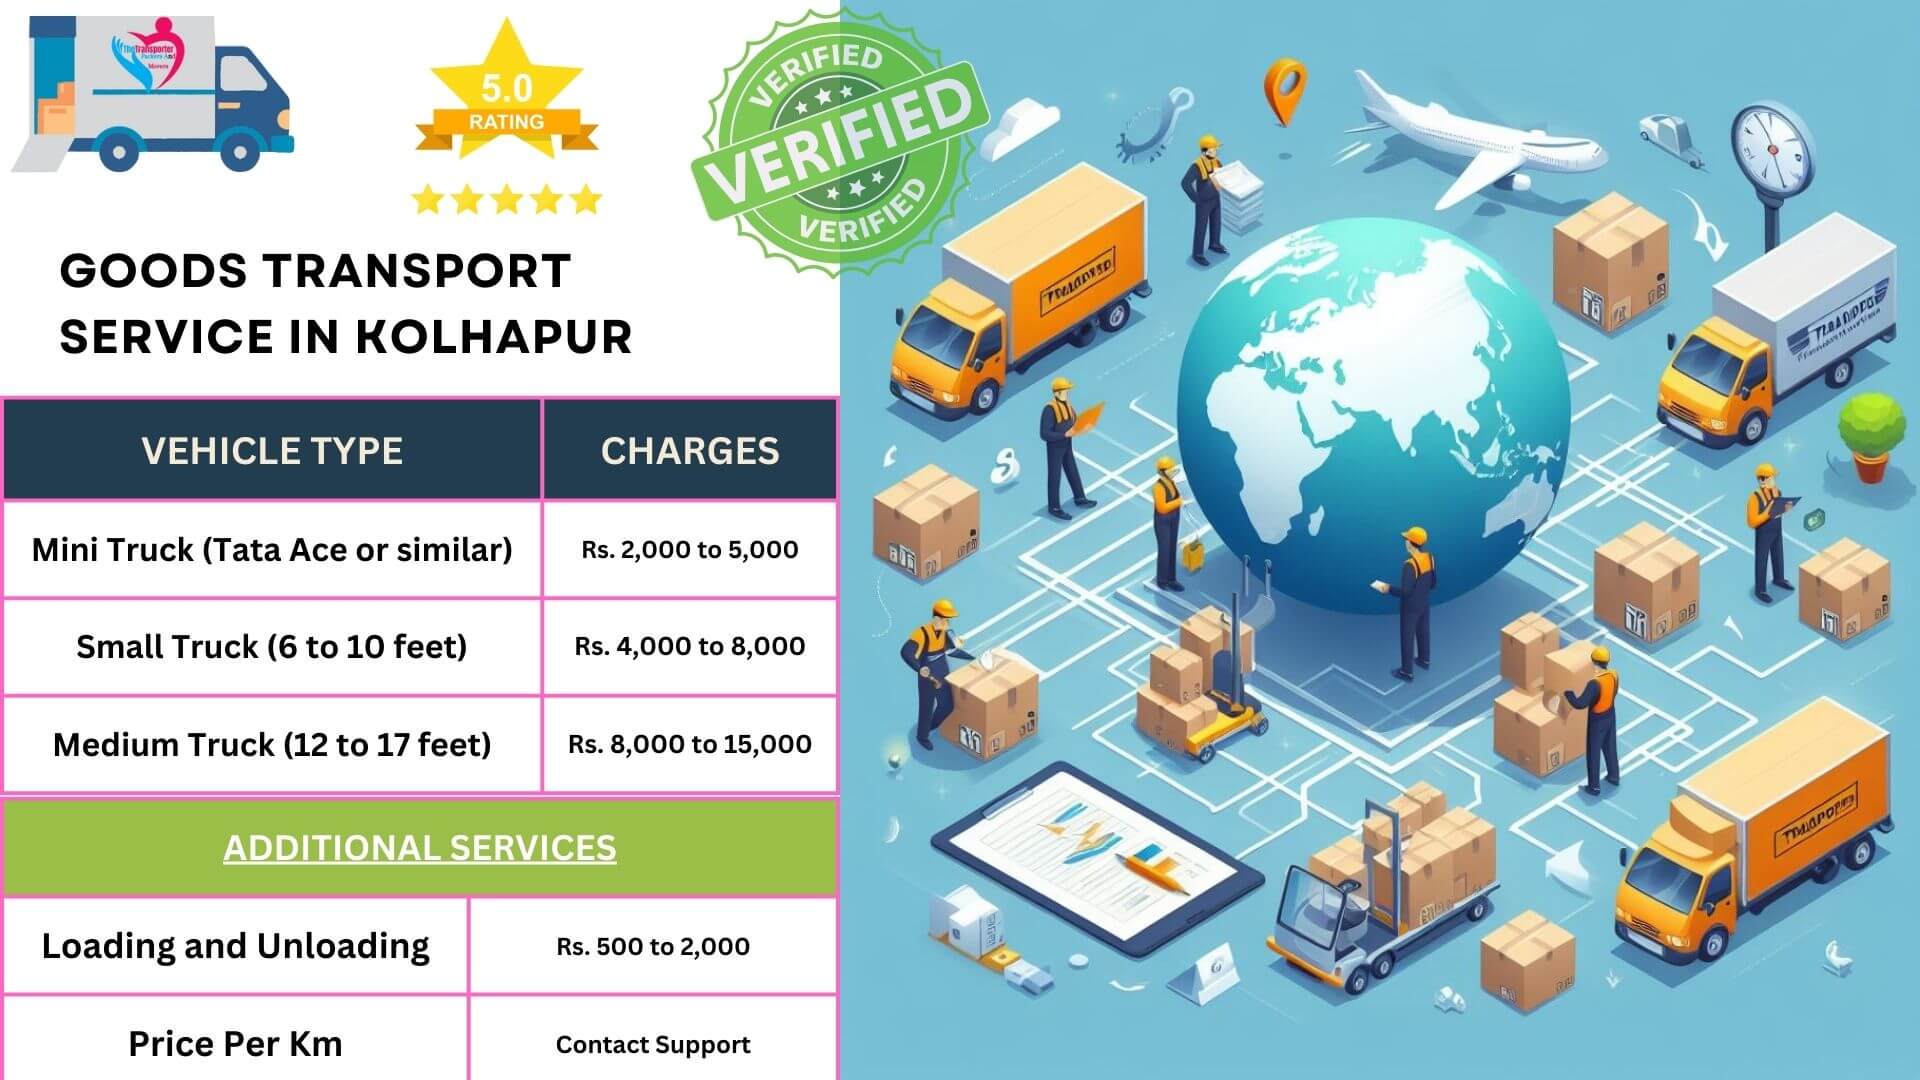 Goods transport services in Kolhapur